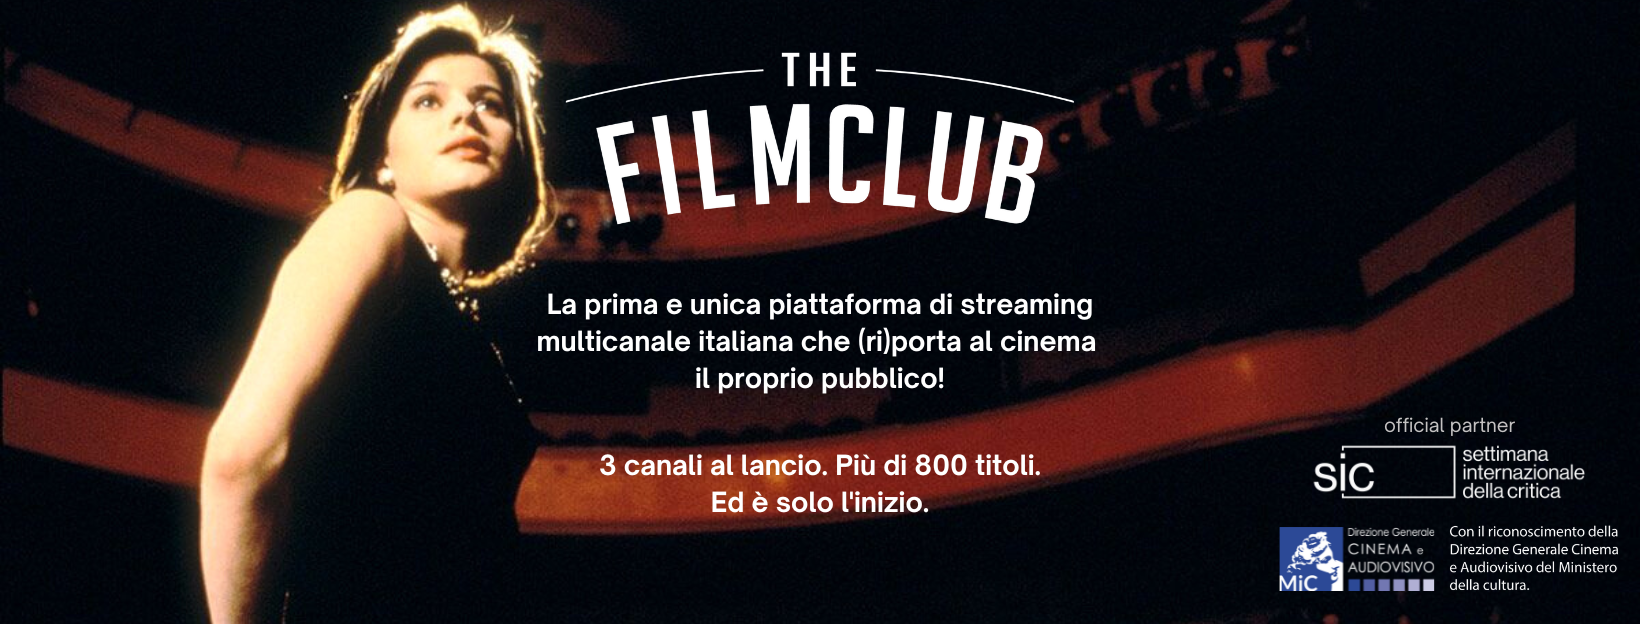 THE FILM CLUB